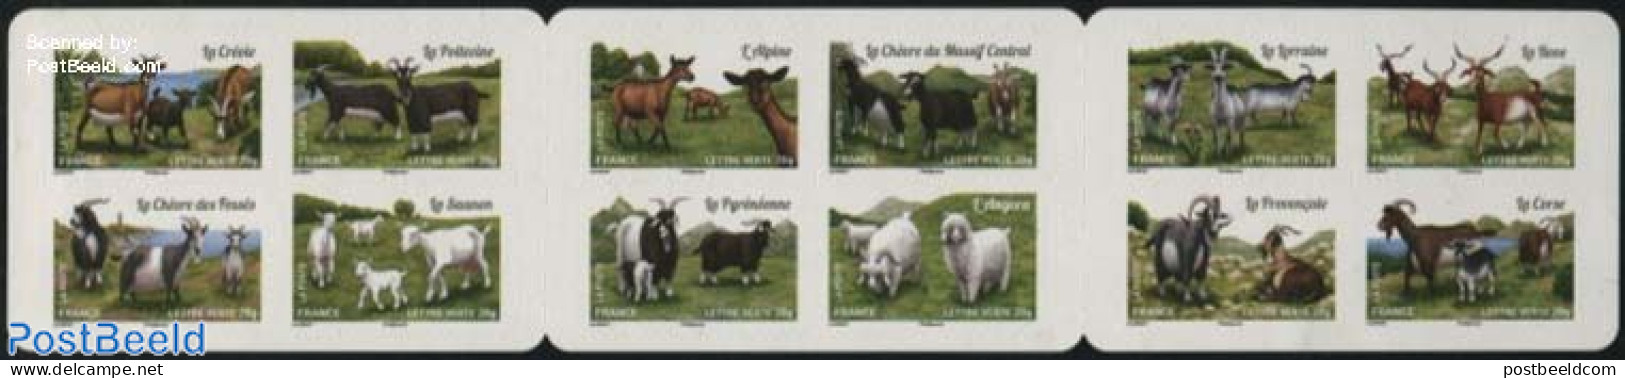 France 2015 Goats Of France Booklet, Mint NH, Nature - Cattle - Stamp Booklets - Ongebruikt